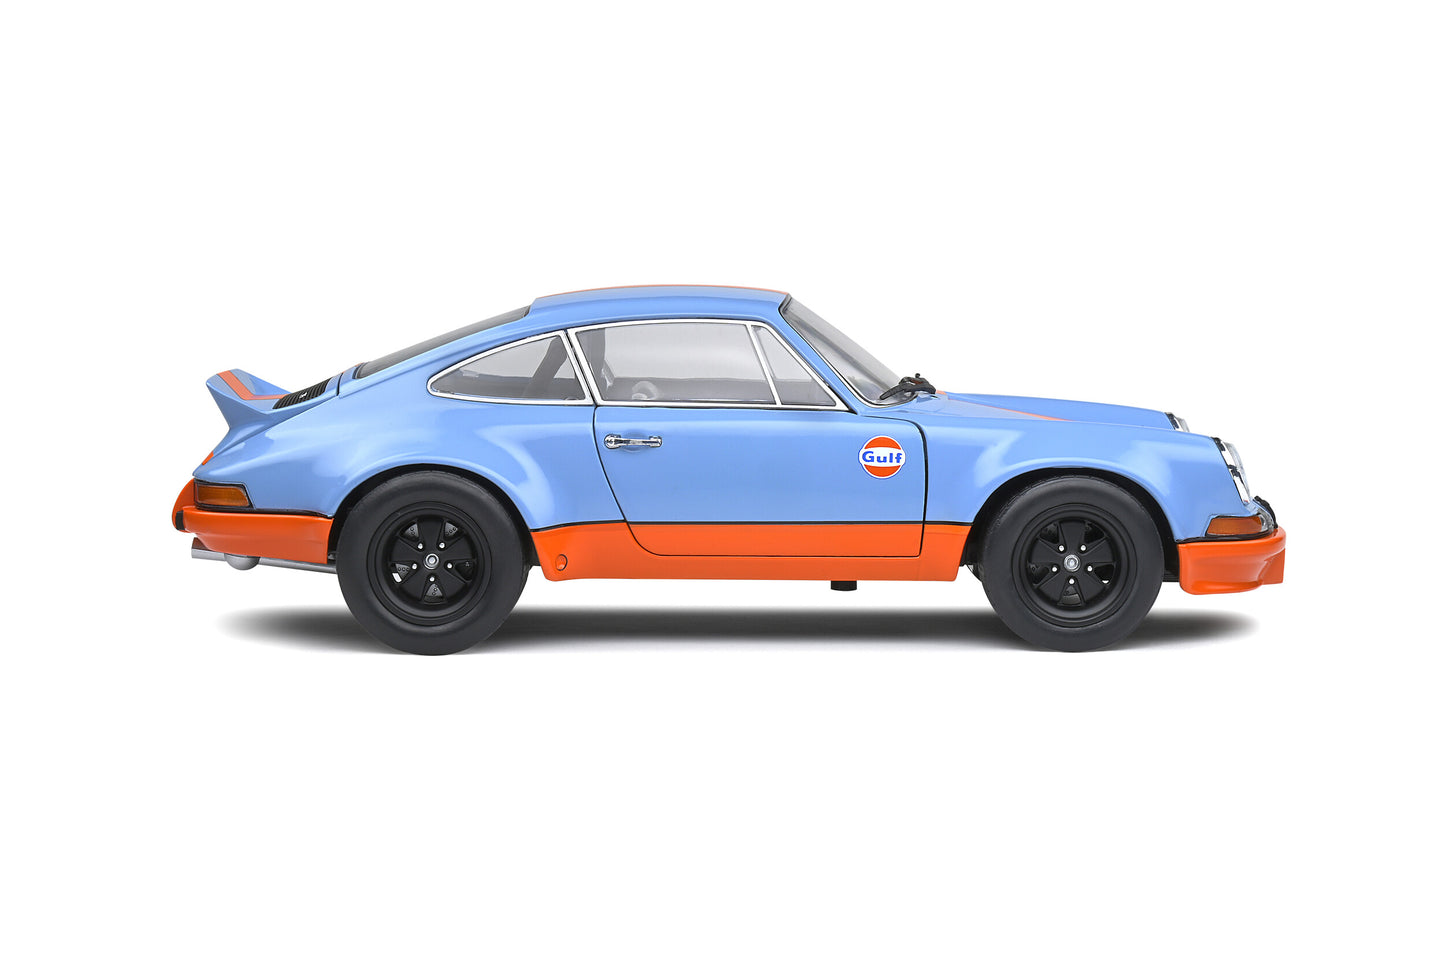 Solido - Porsche 911 (901) RSR (Gulf Blue) 1:18 Scale Model Car